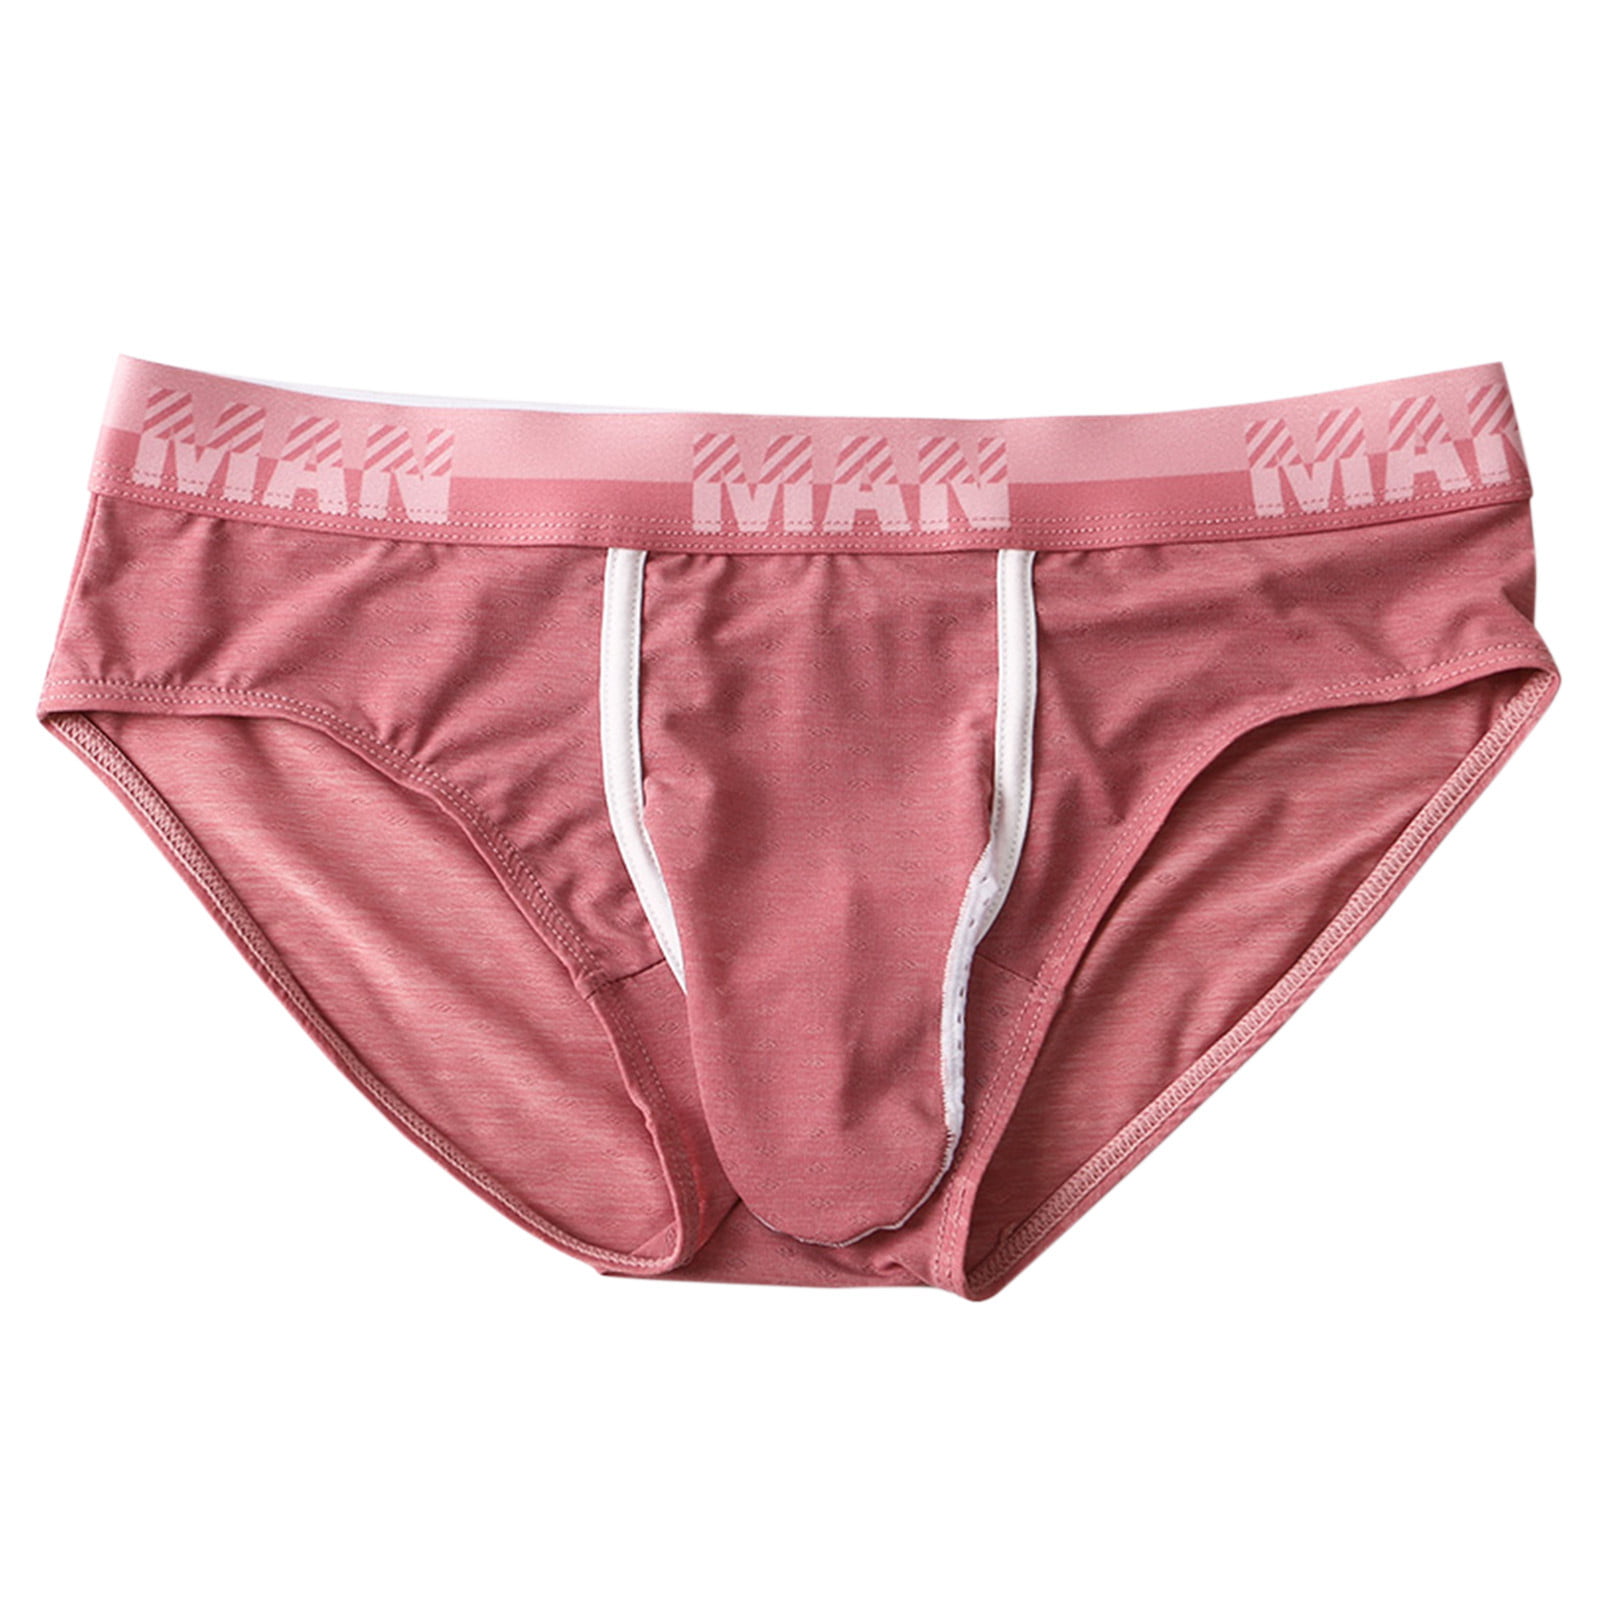 Pimfylm Cotton Underwear For Men Men's Underwear Classic Full Rise Brief C  X-Large